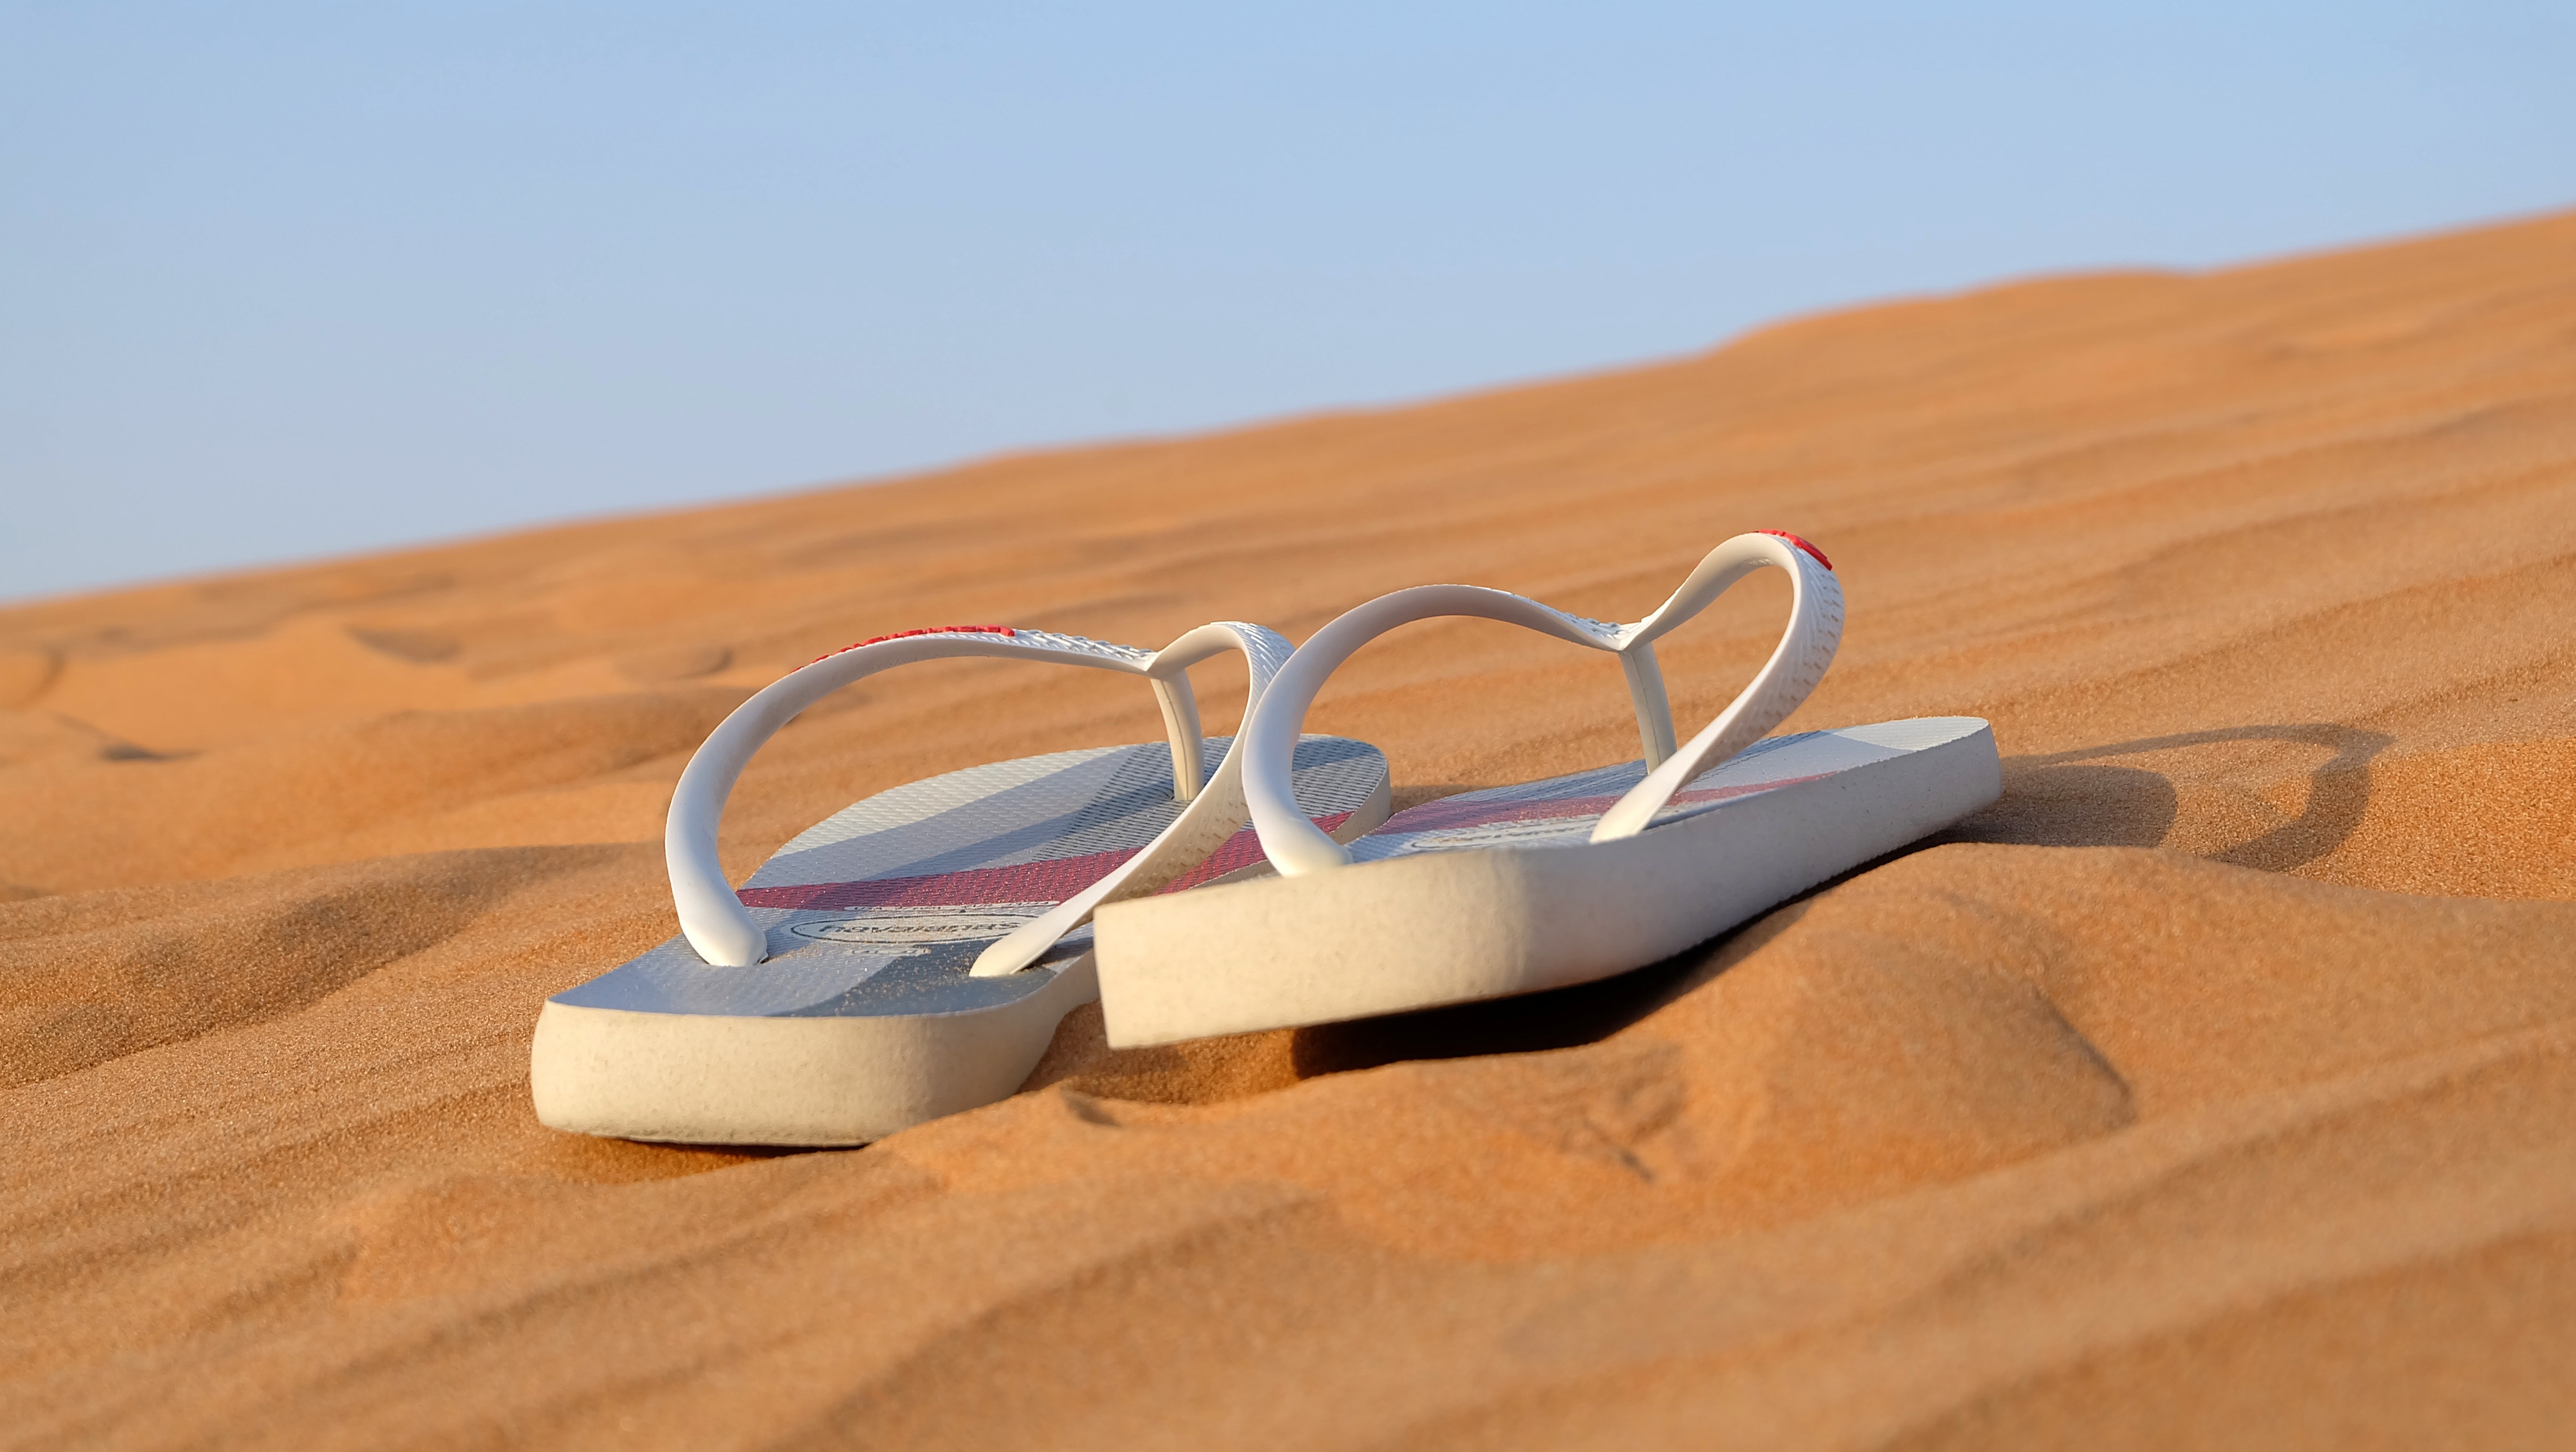 Flip flops on sand